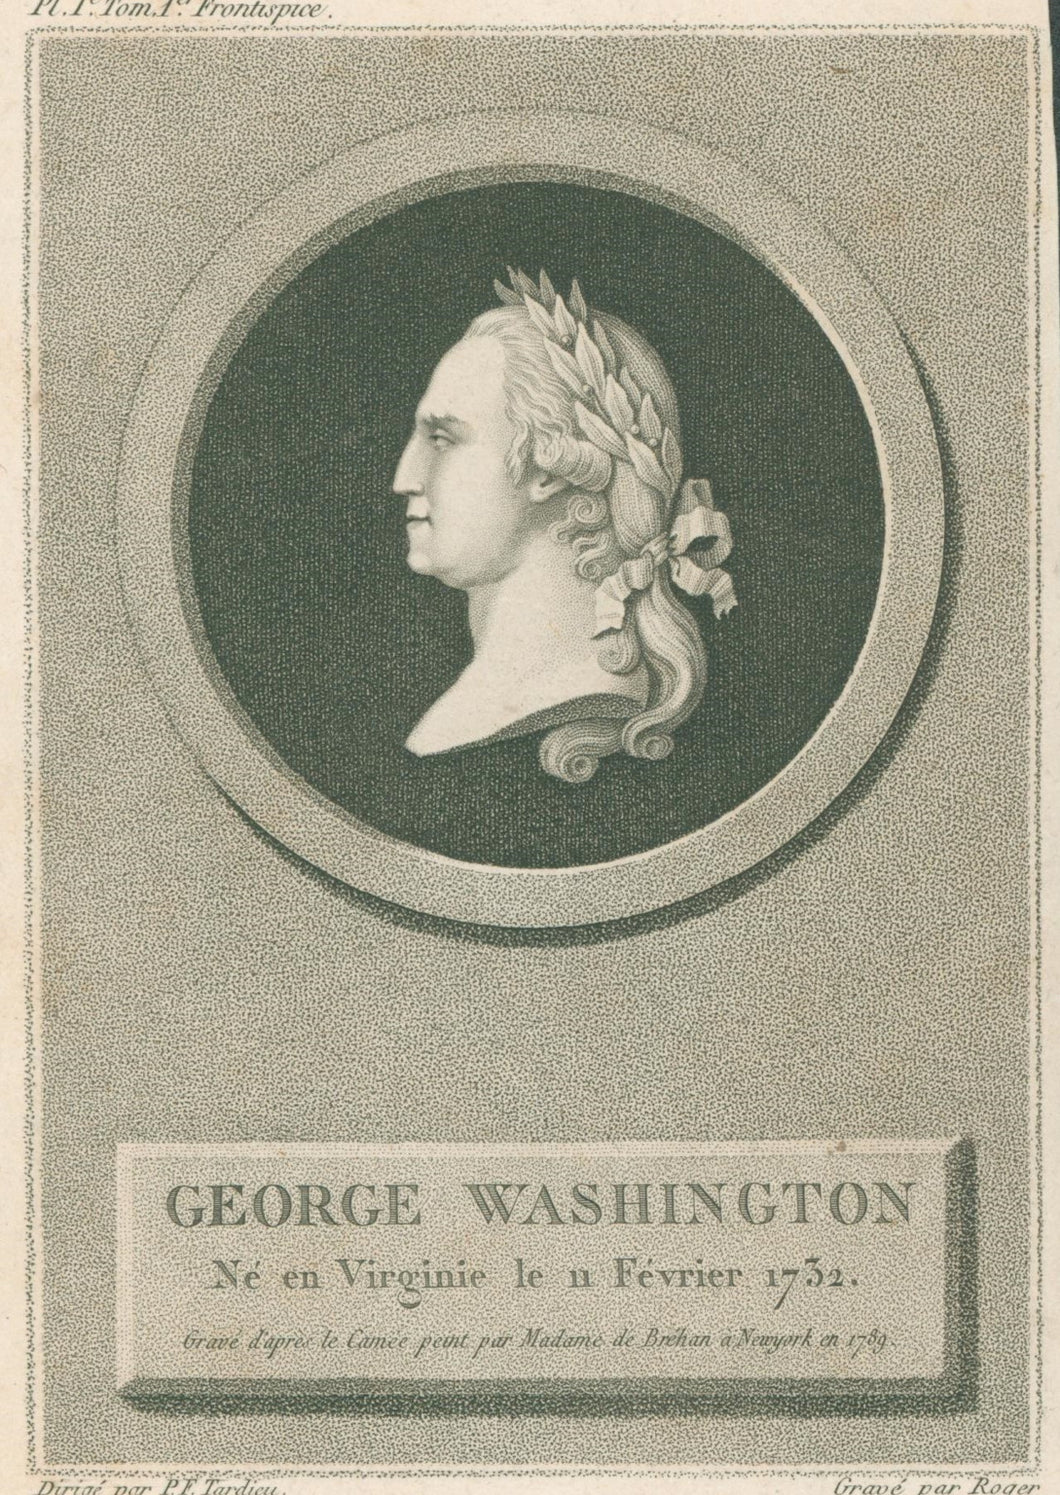 Tardieu, Pierre F.  “George Washington”